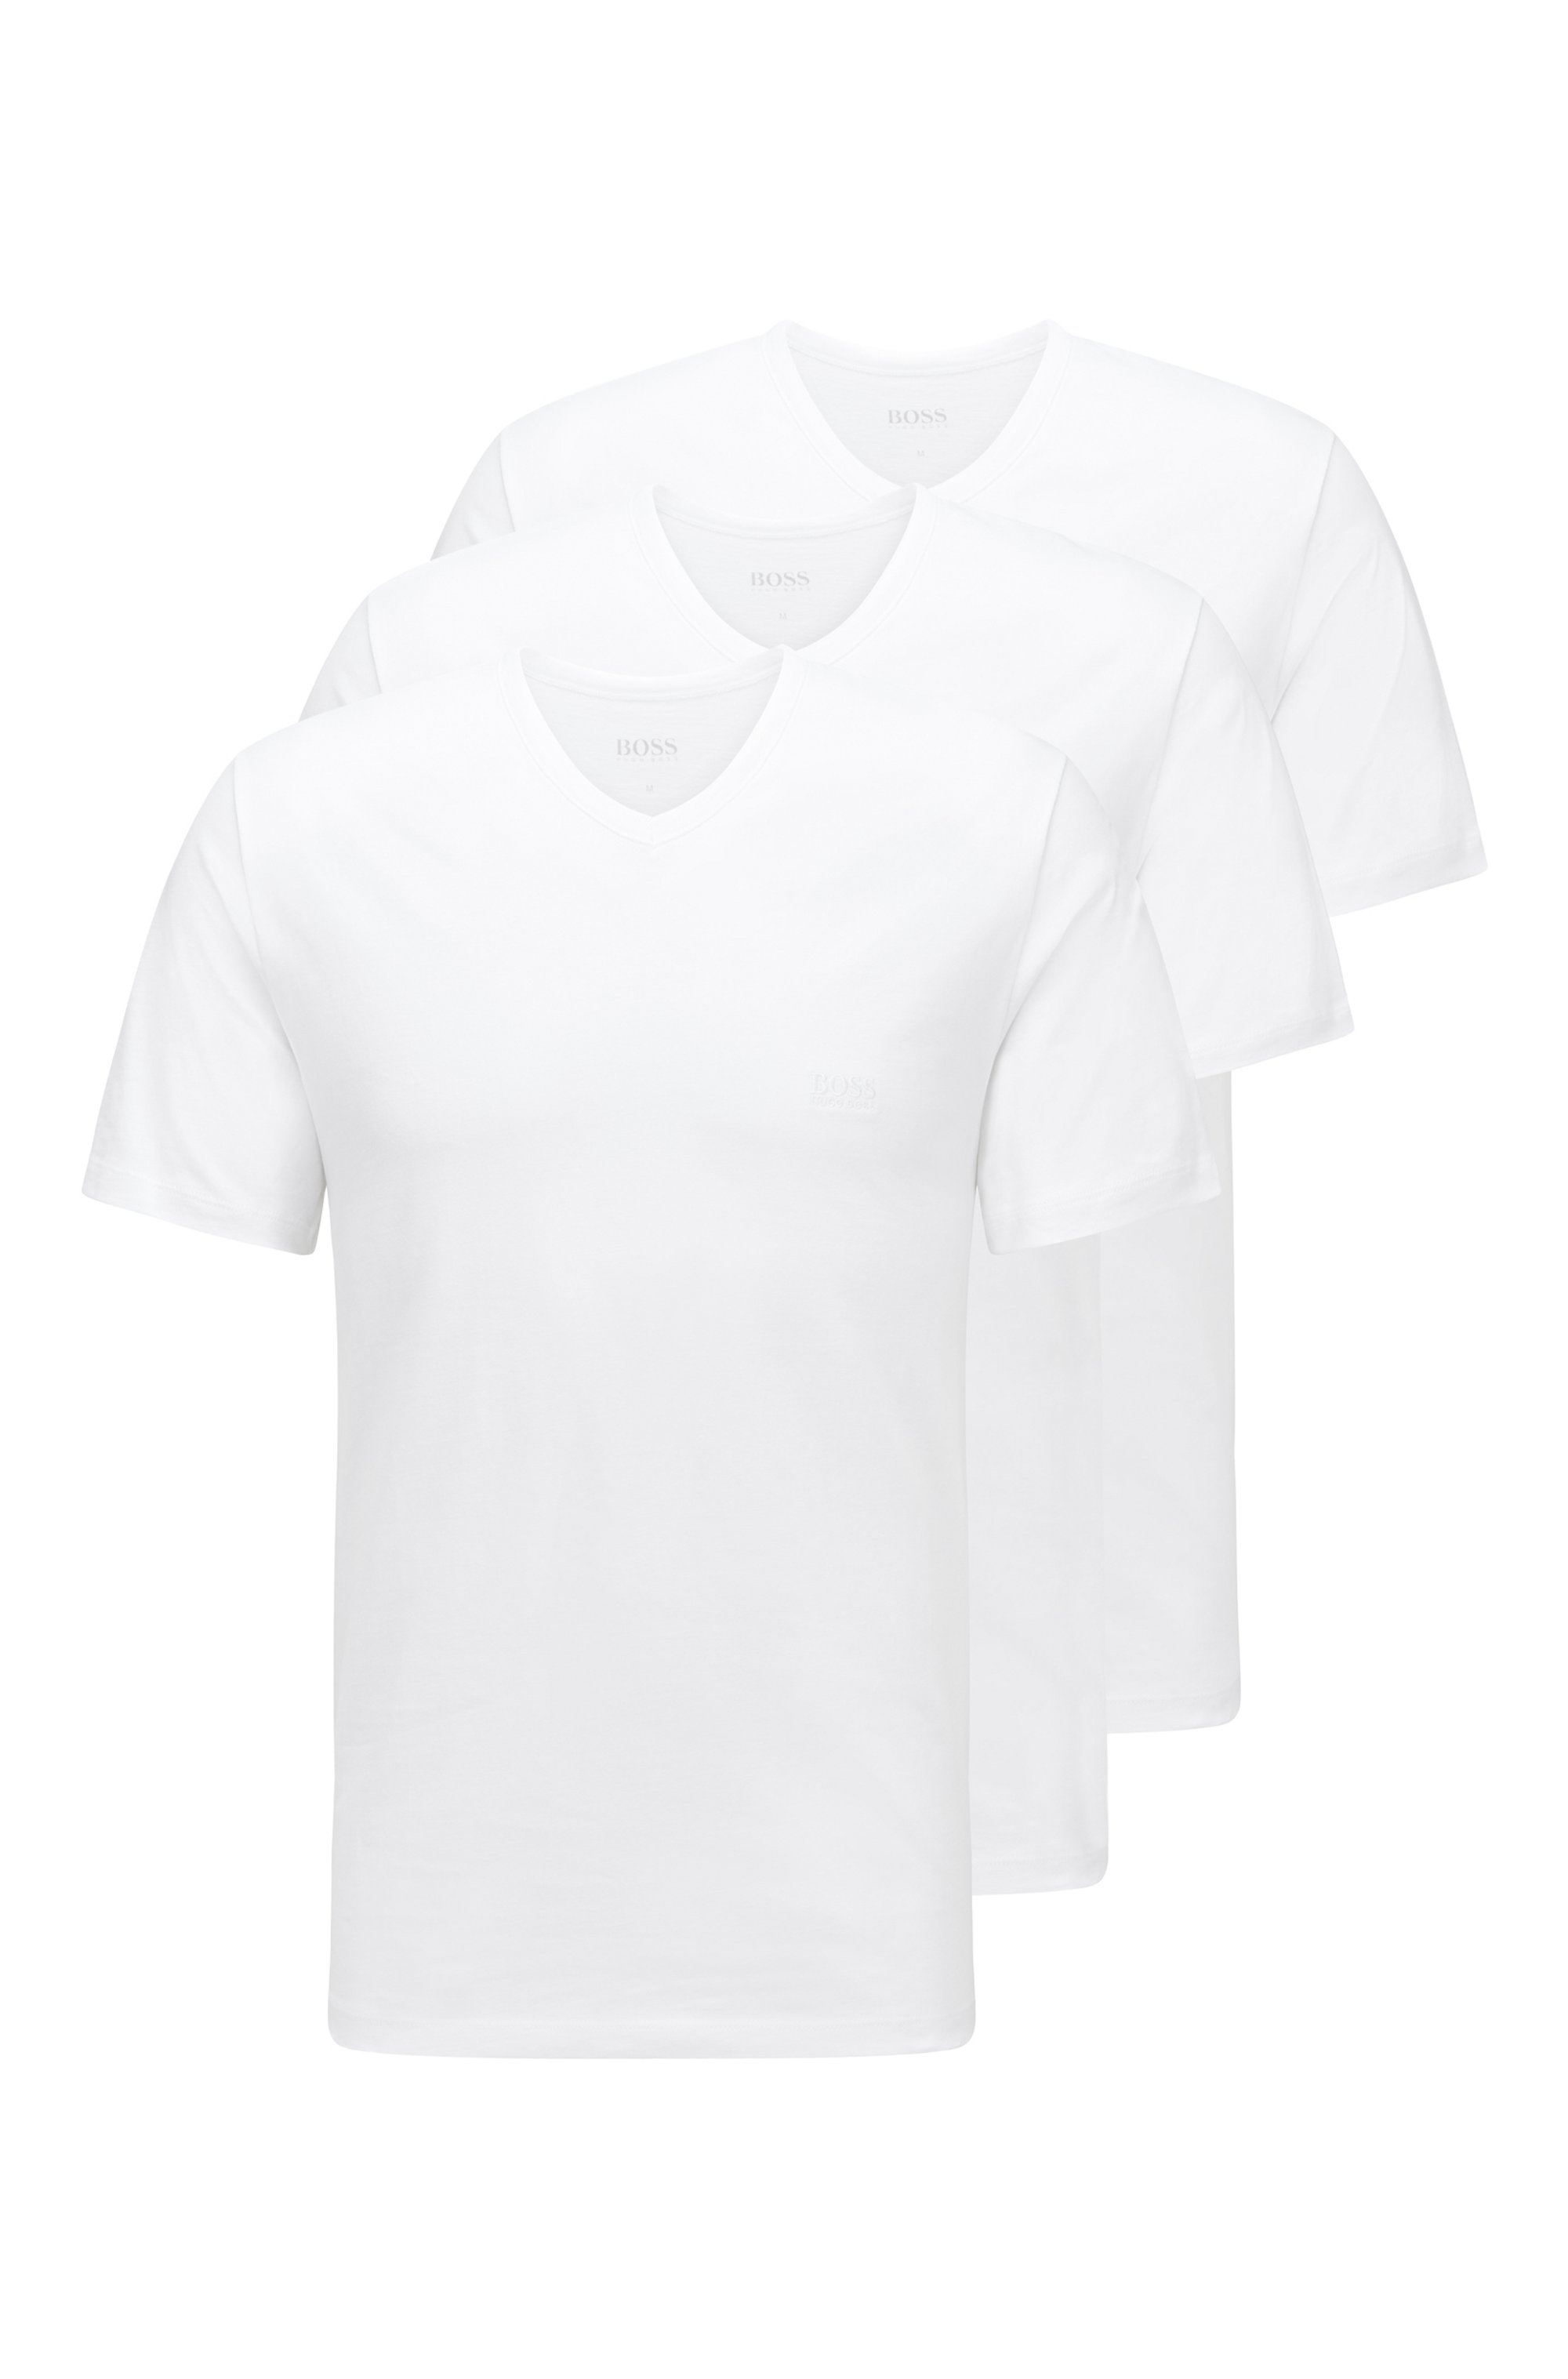 Three-pack of V-neck underwear T-shirts in cotton, White